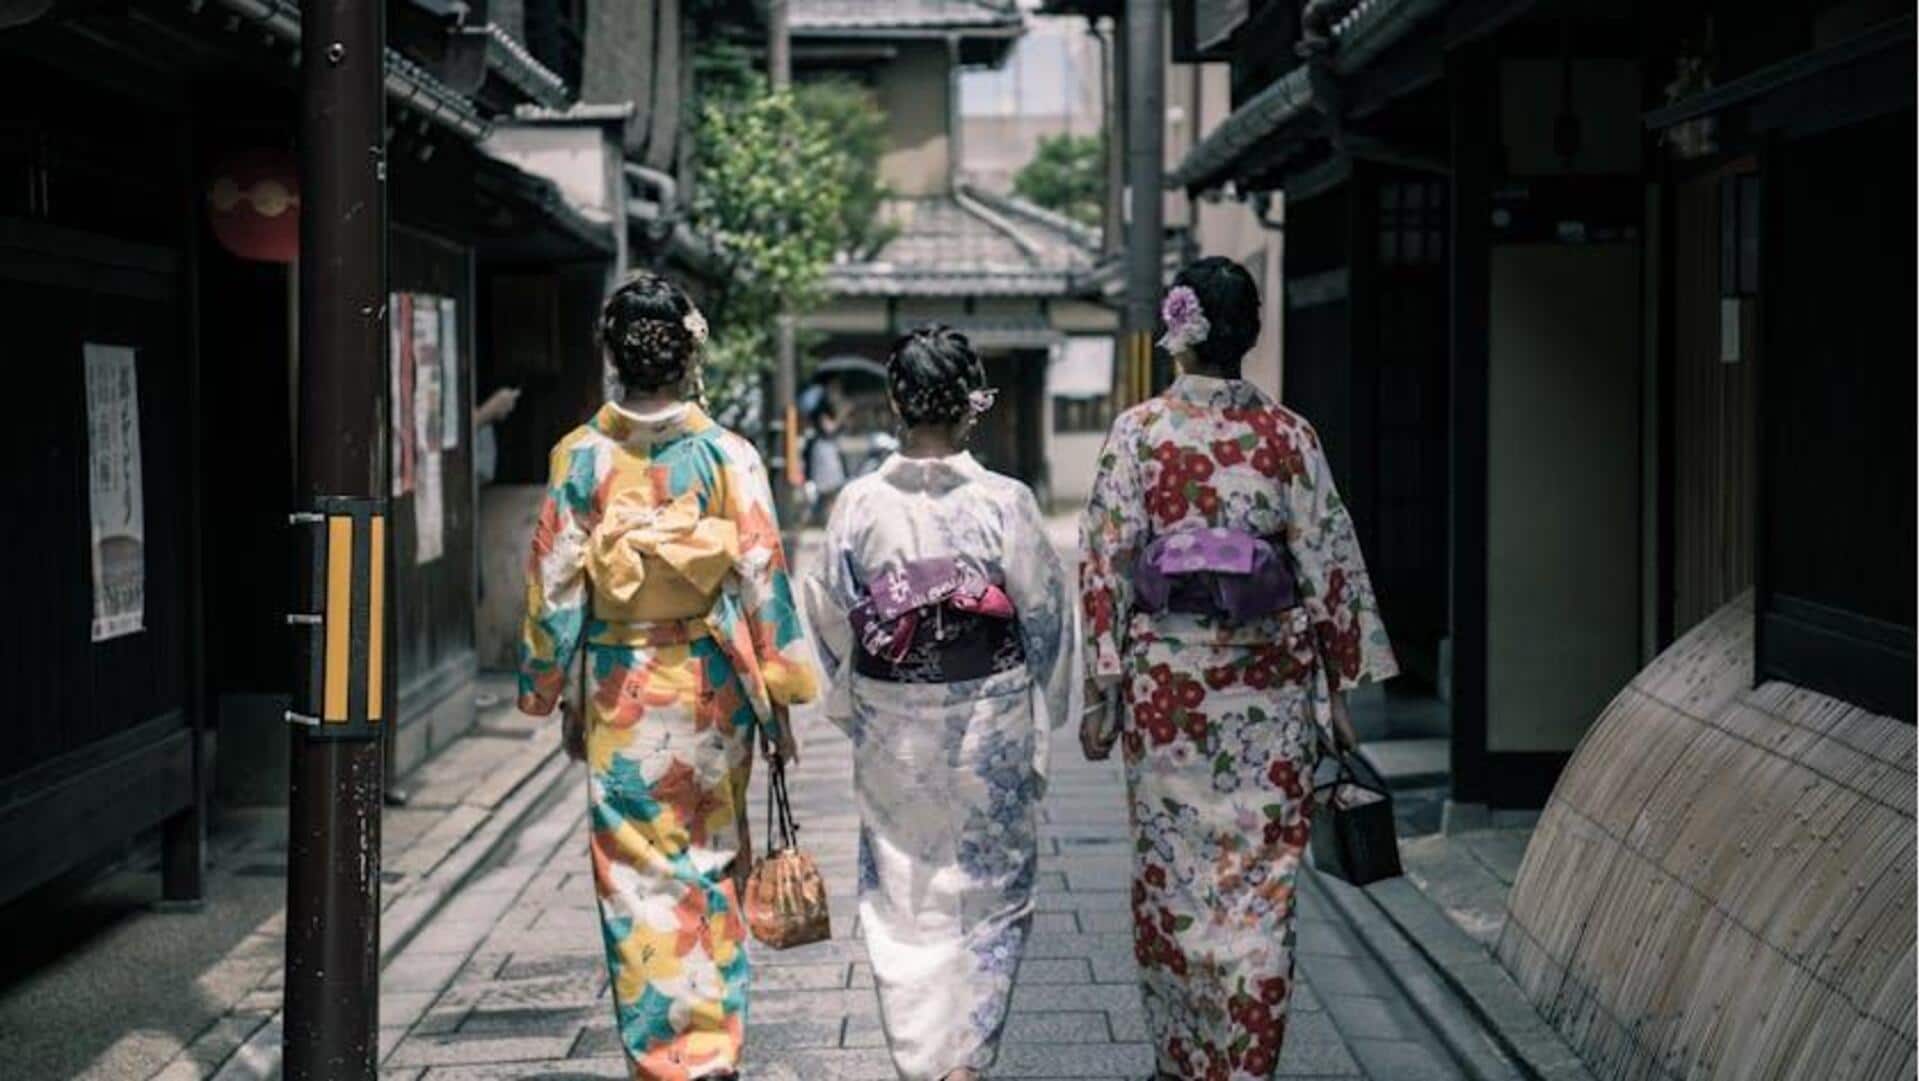 Temukan lorong-lorong rahasia Edo di Kyoto dengan panduan ini